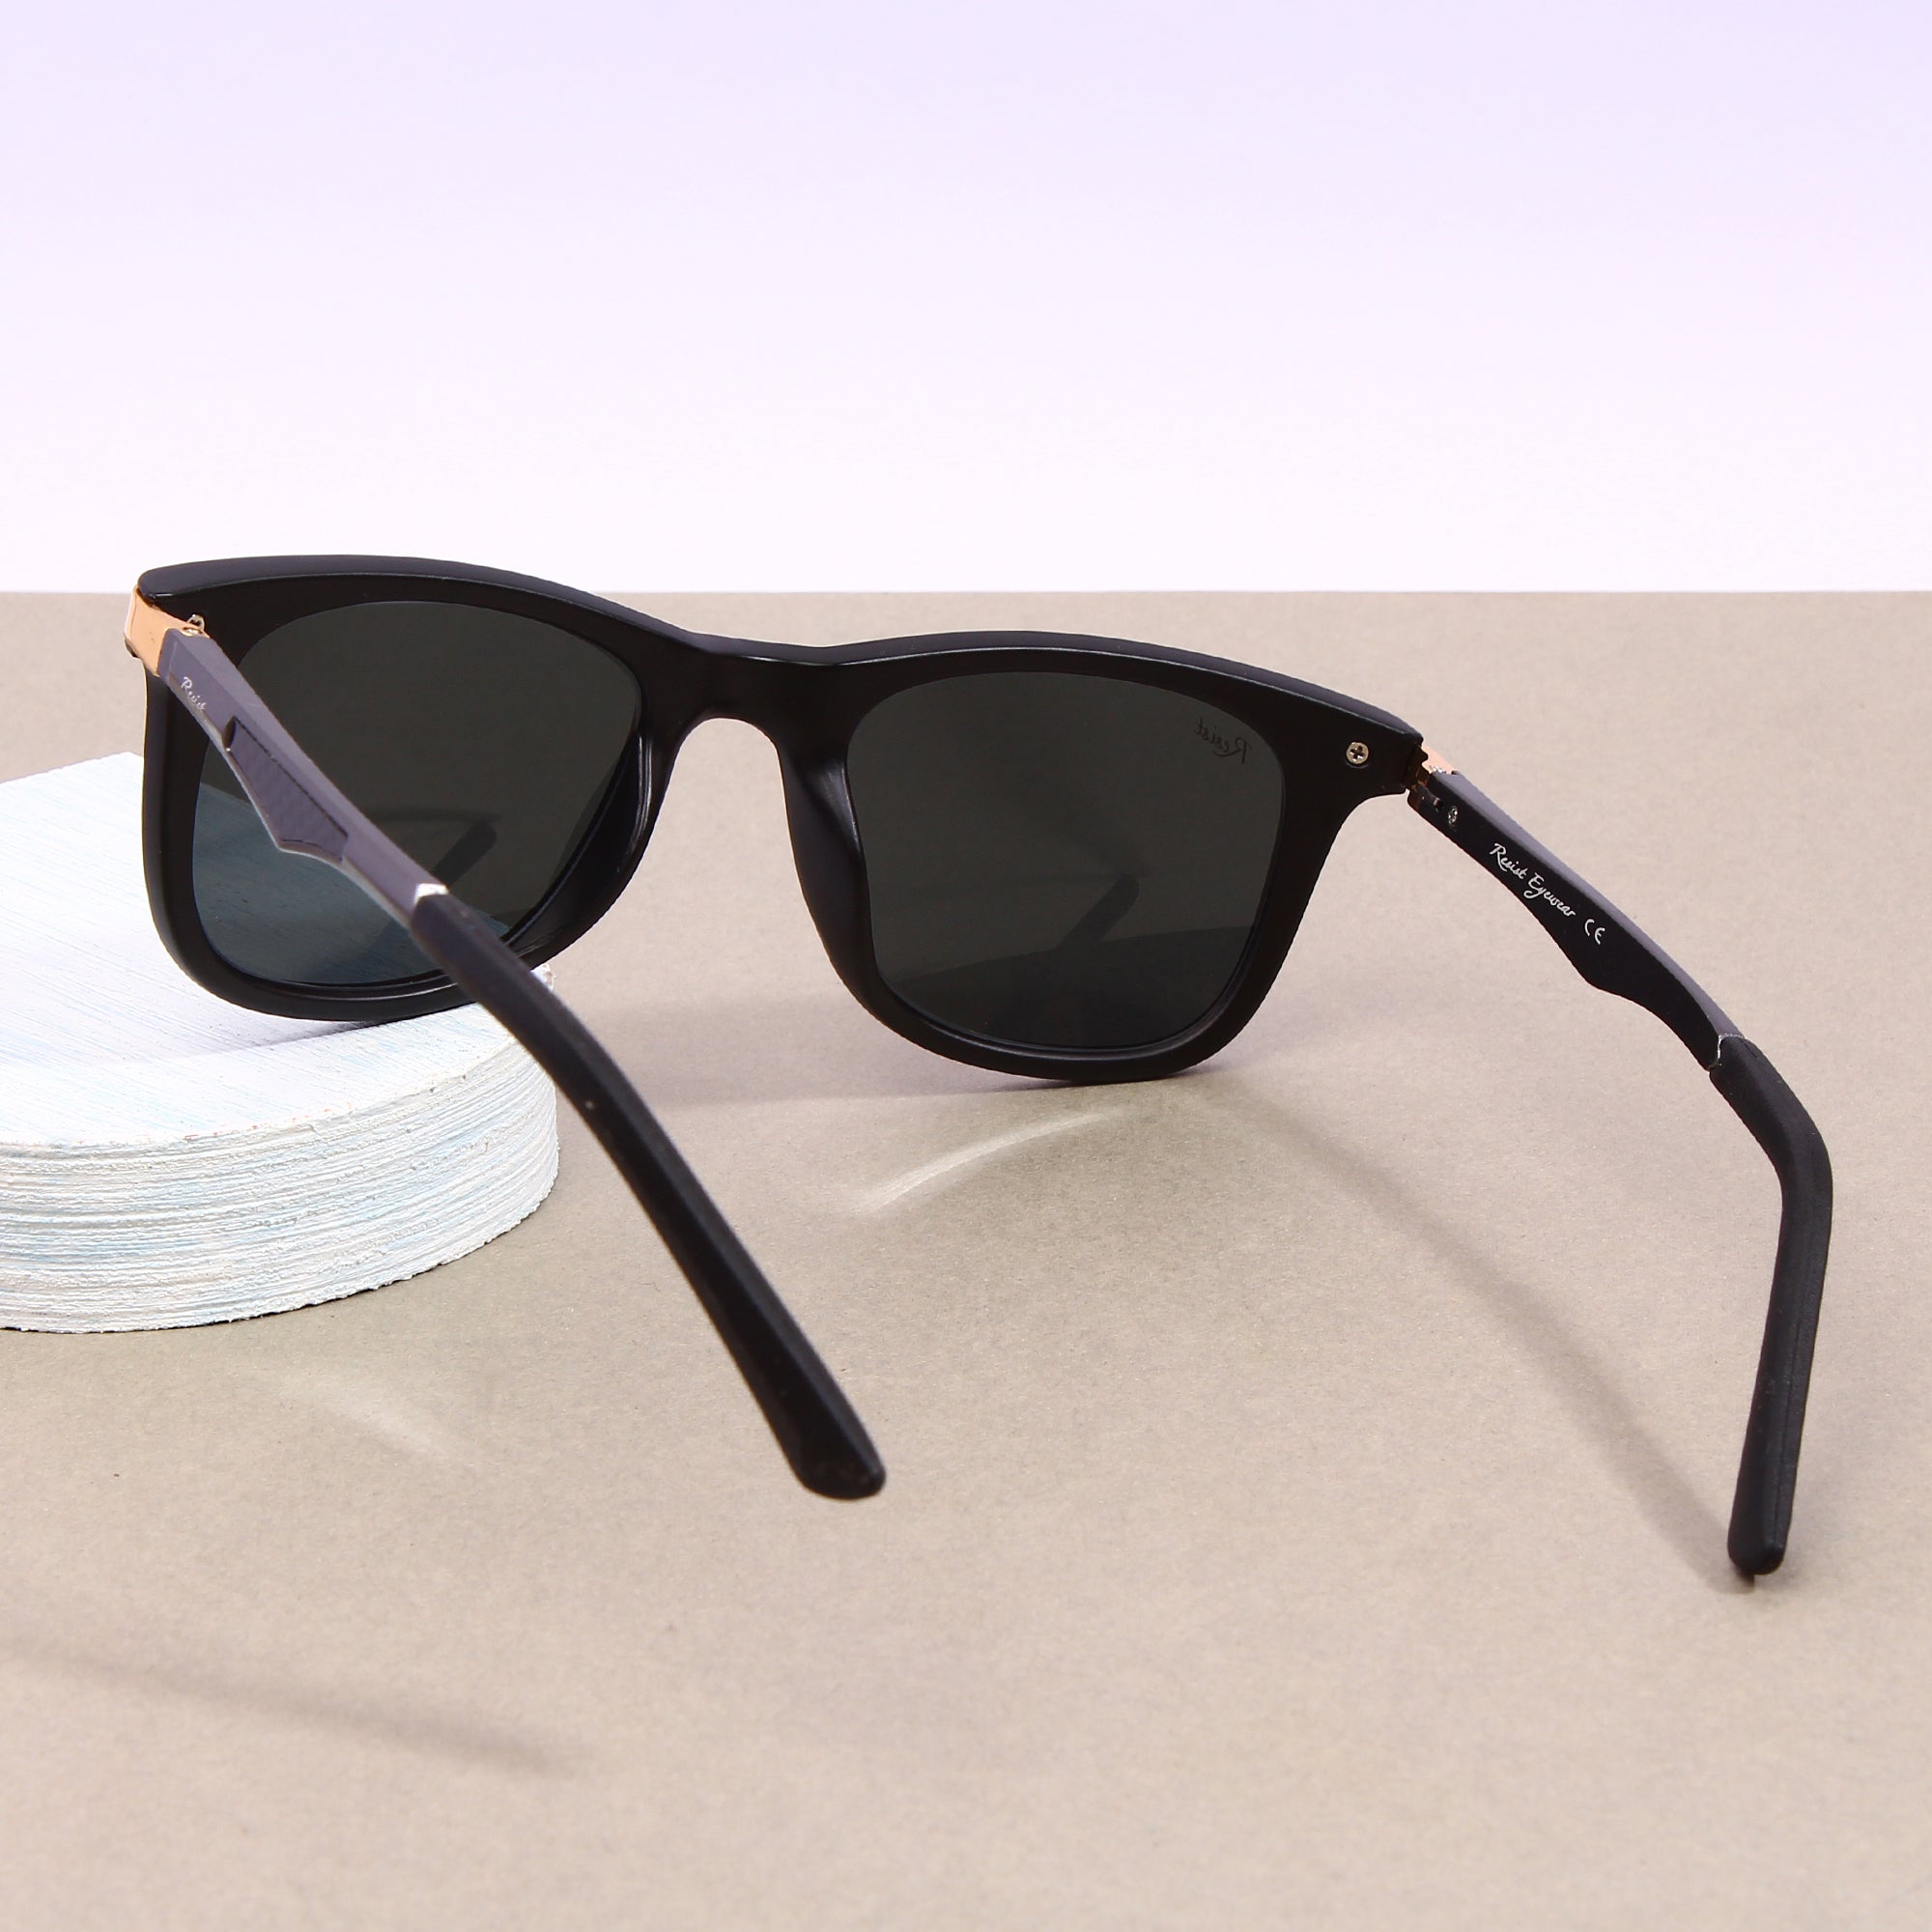 Buy Wayfarer Sunglasses For Men - 2 Sunglasses @999 - Woggles